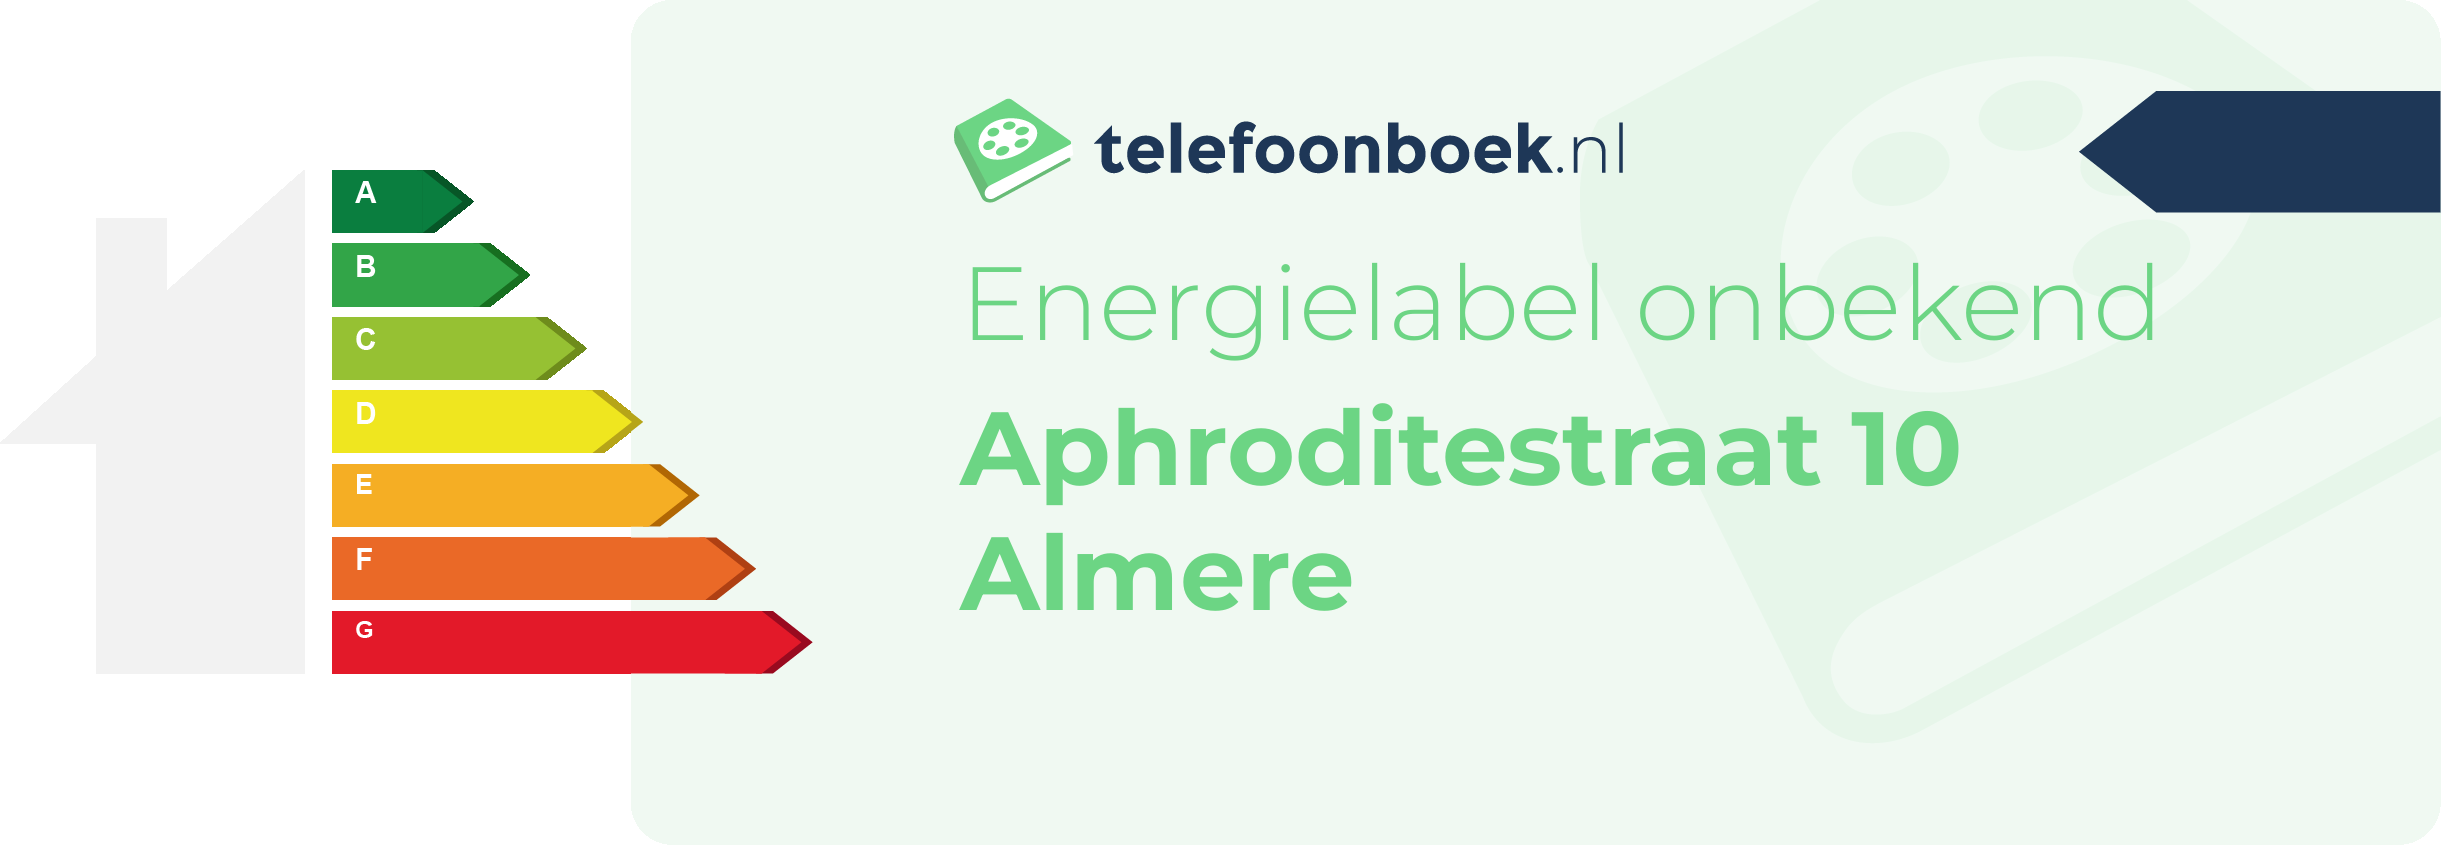 Energielabel Aphroditestraat 10 Almere